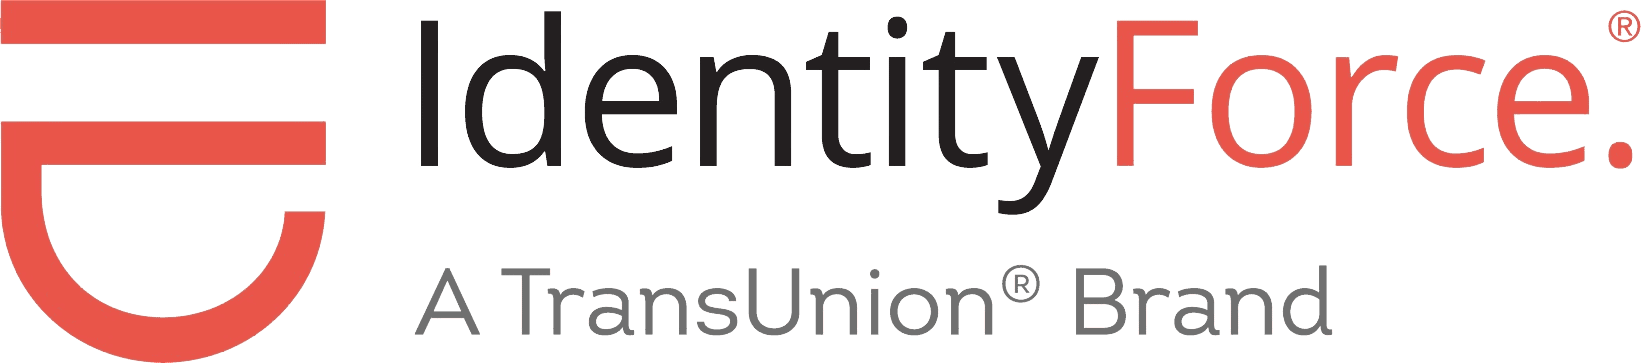 IdentityForce: Identity Theft Protection - Product Logo